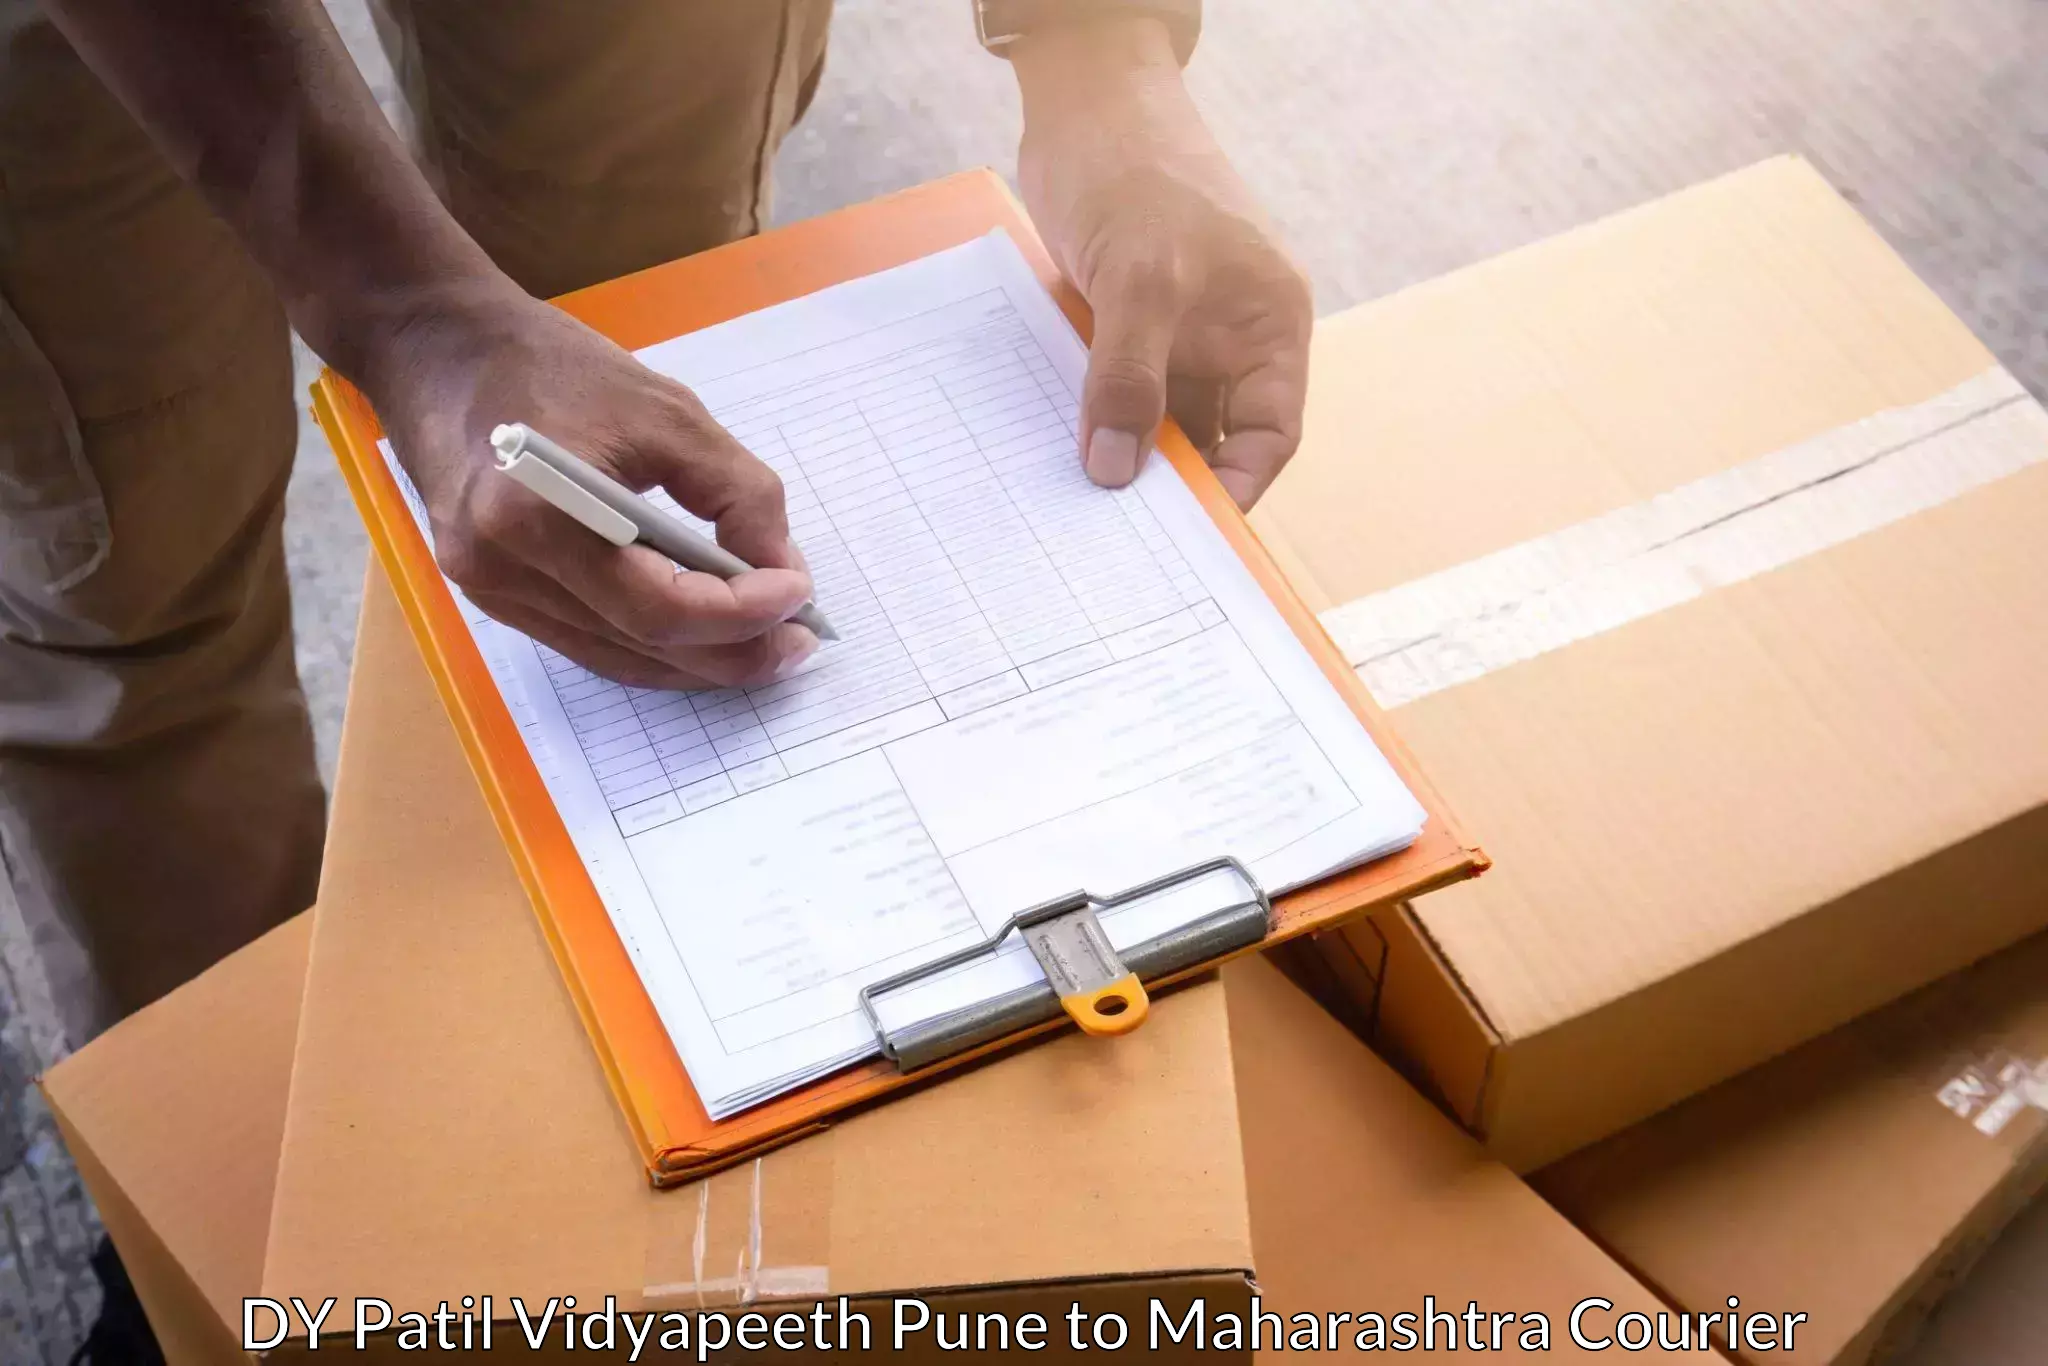 Tech-enabled shipping DY Patil Vidyapeeth Pune to Maharashtra